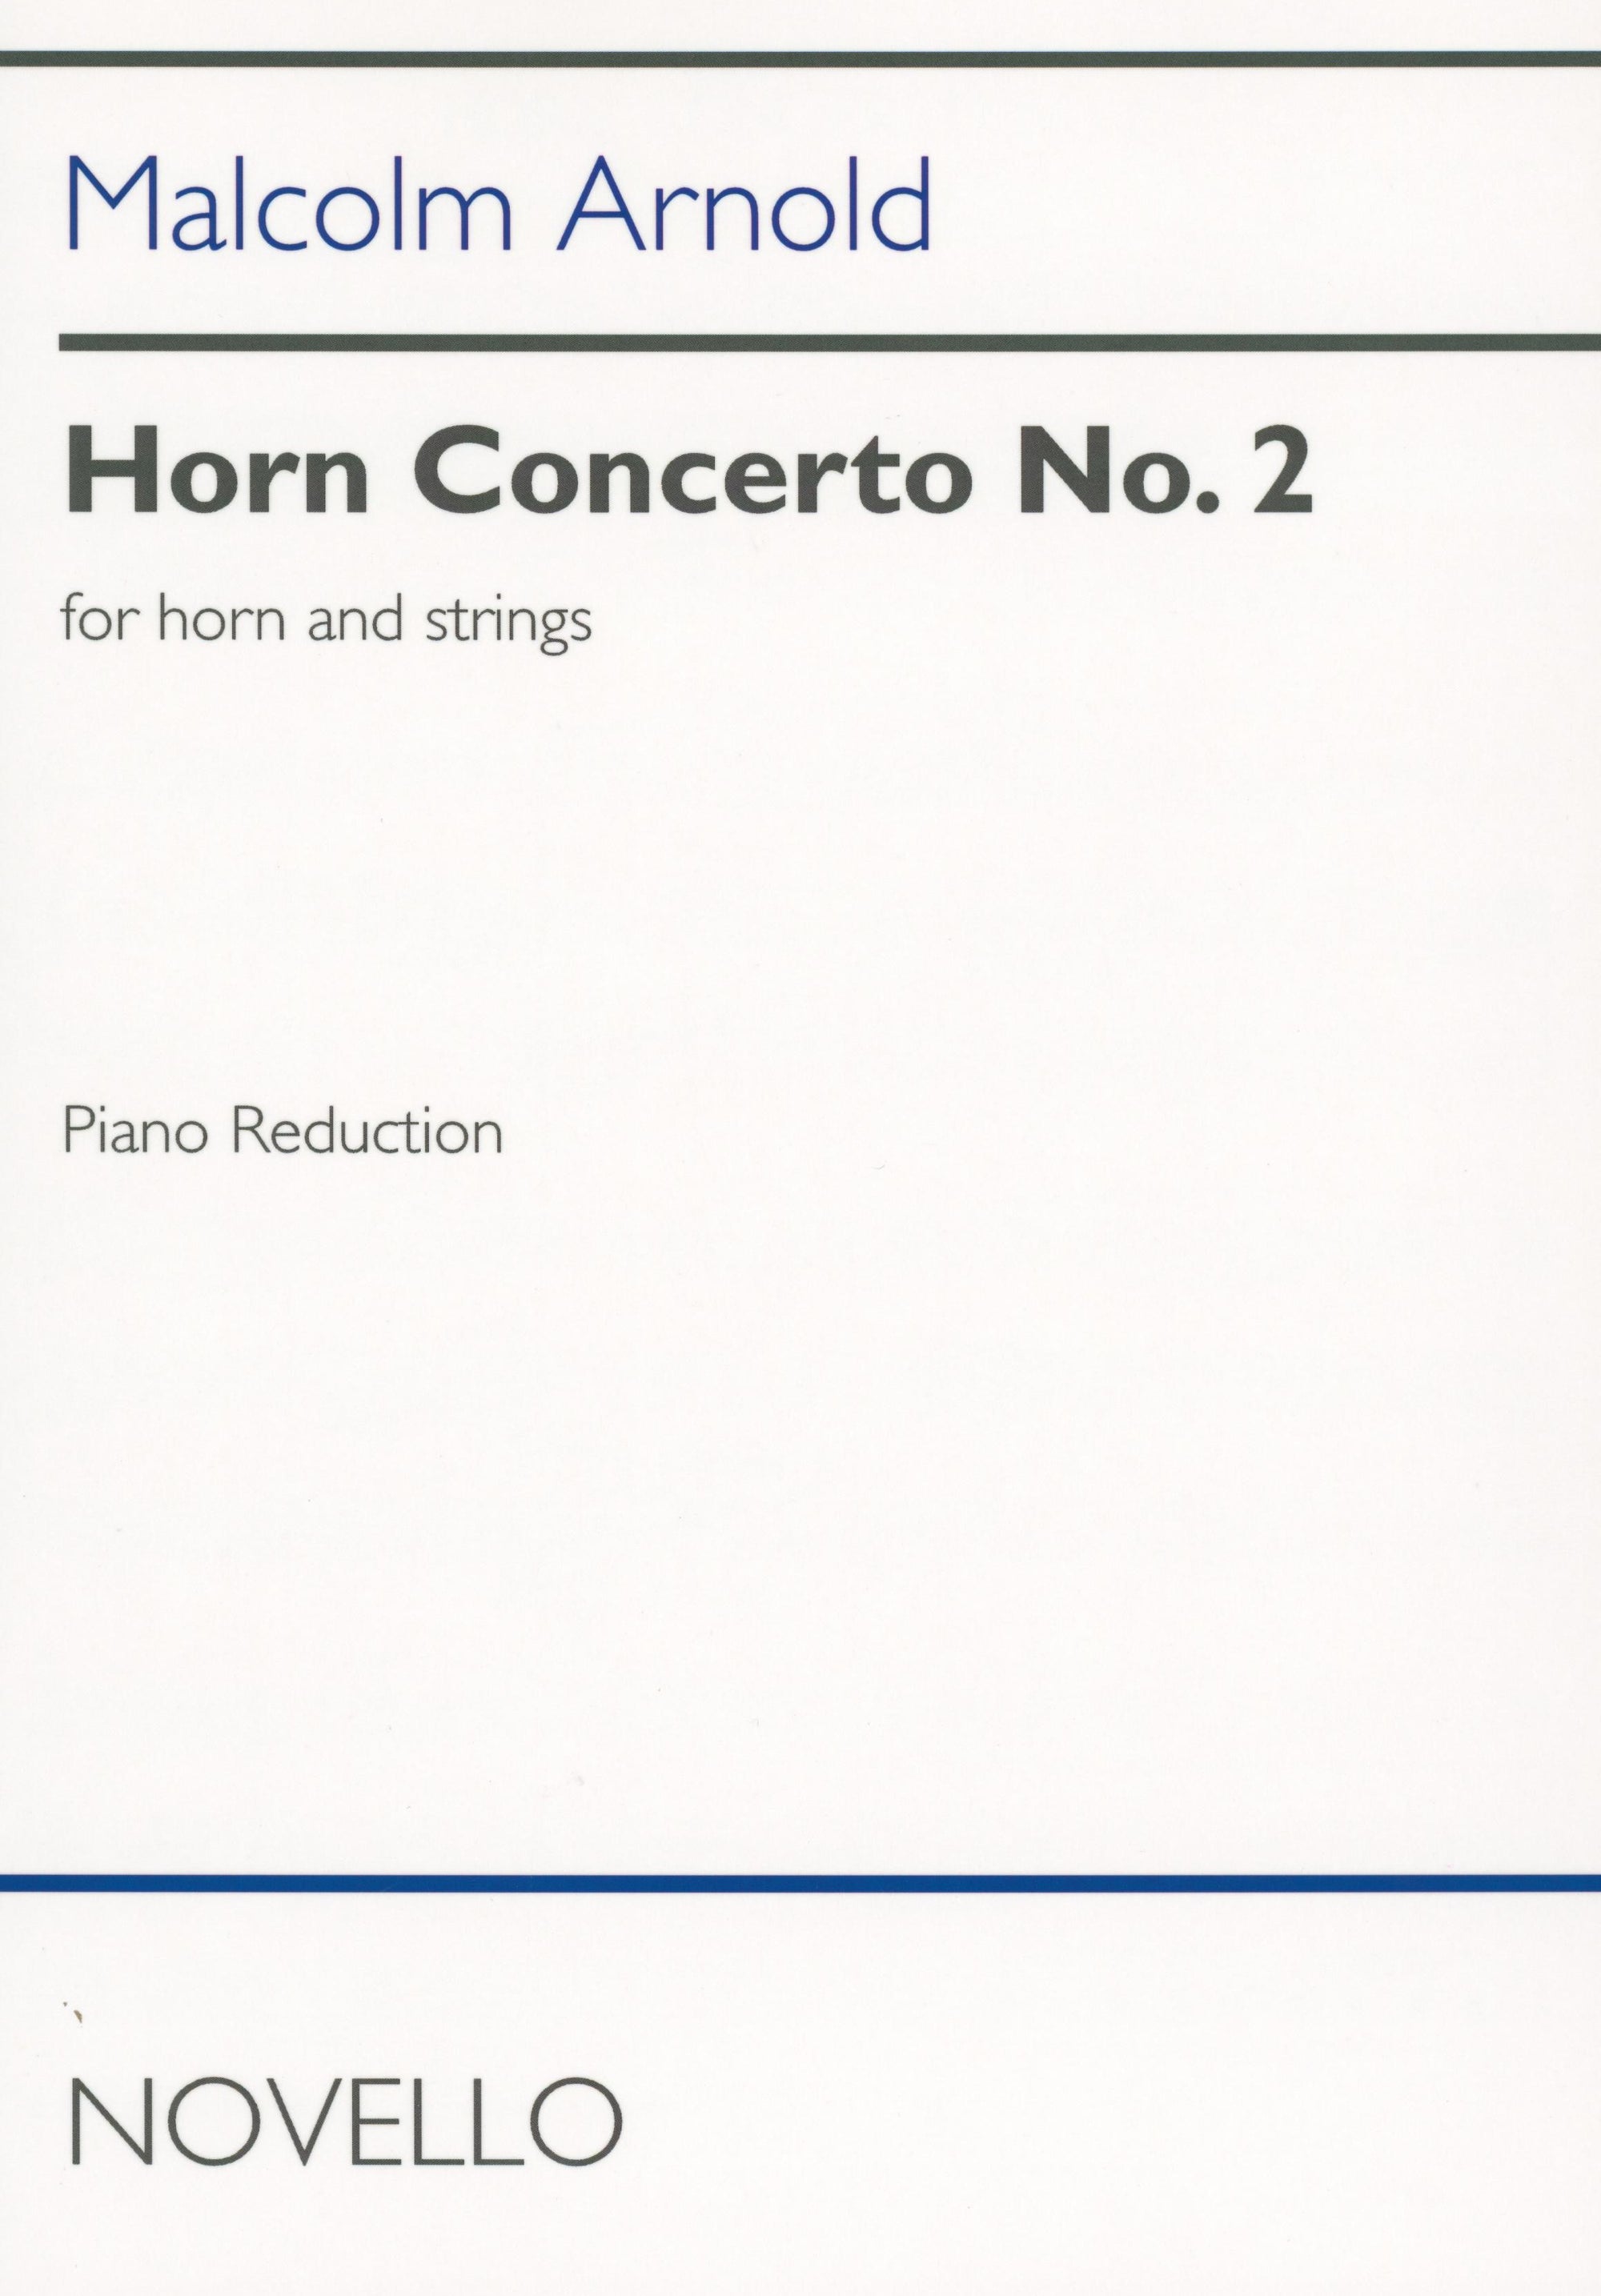 Arnold: Horn Concerto No. 2, Op. 58